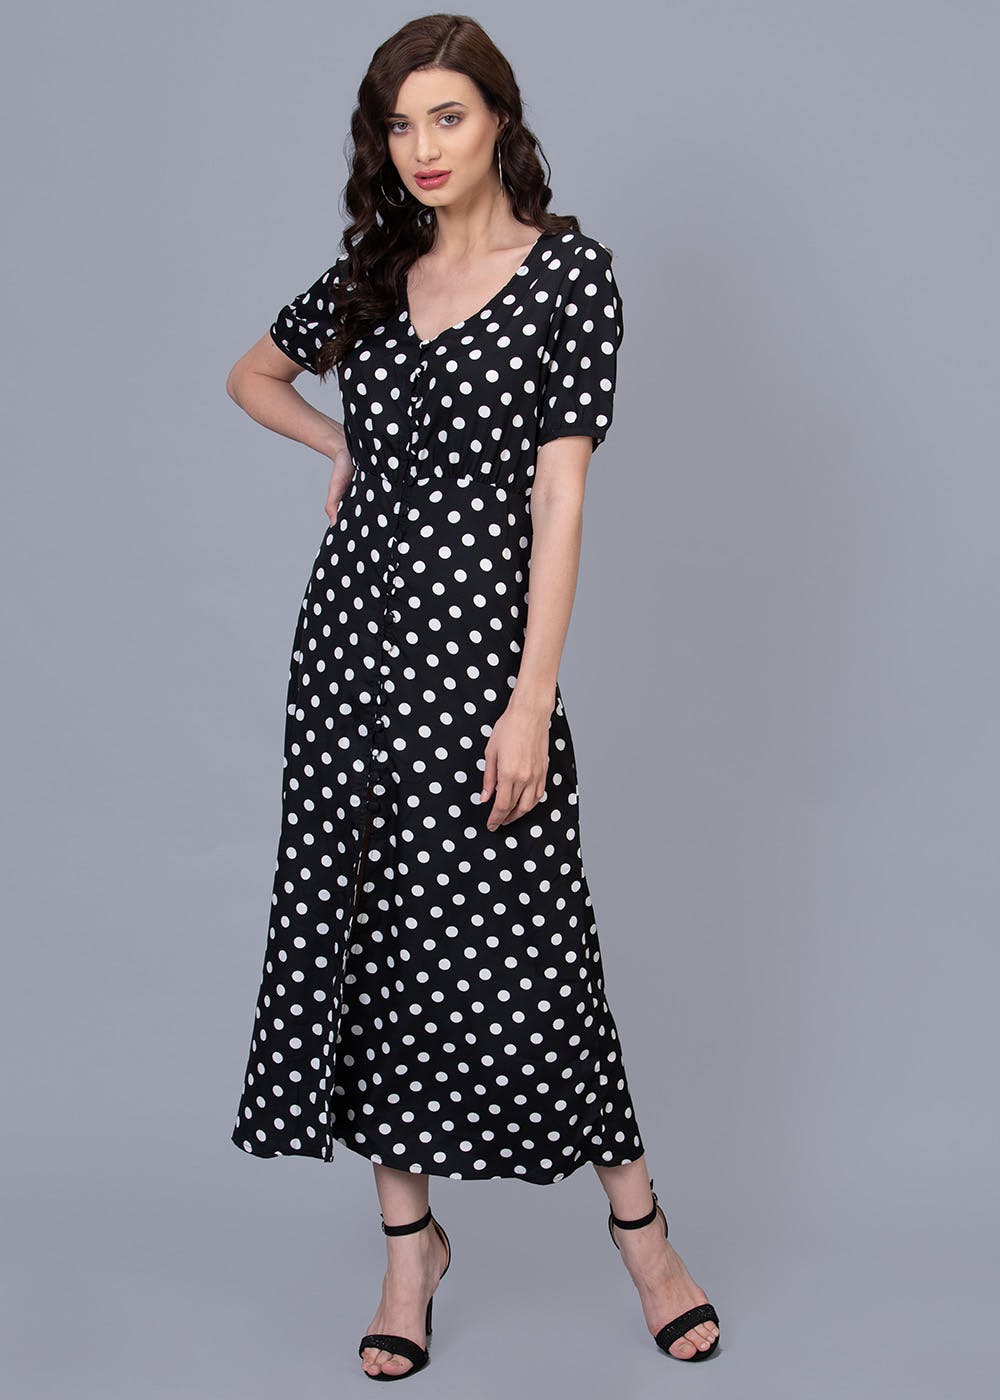 black polka dot long dress